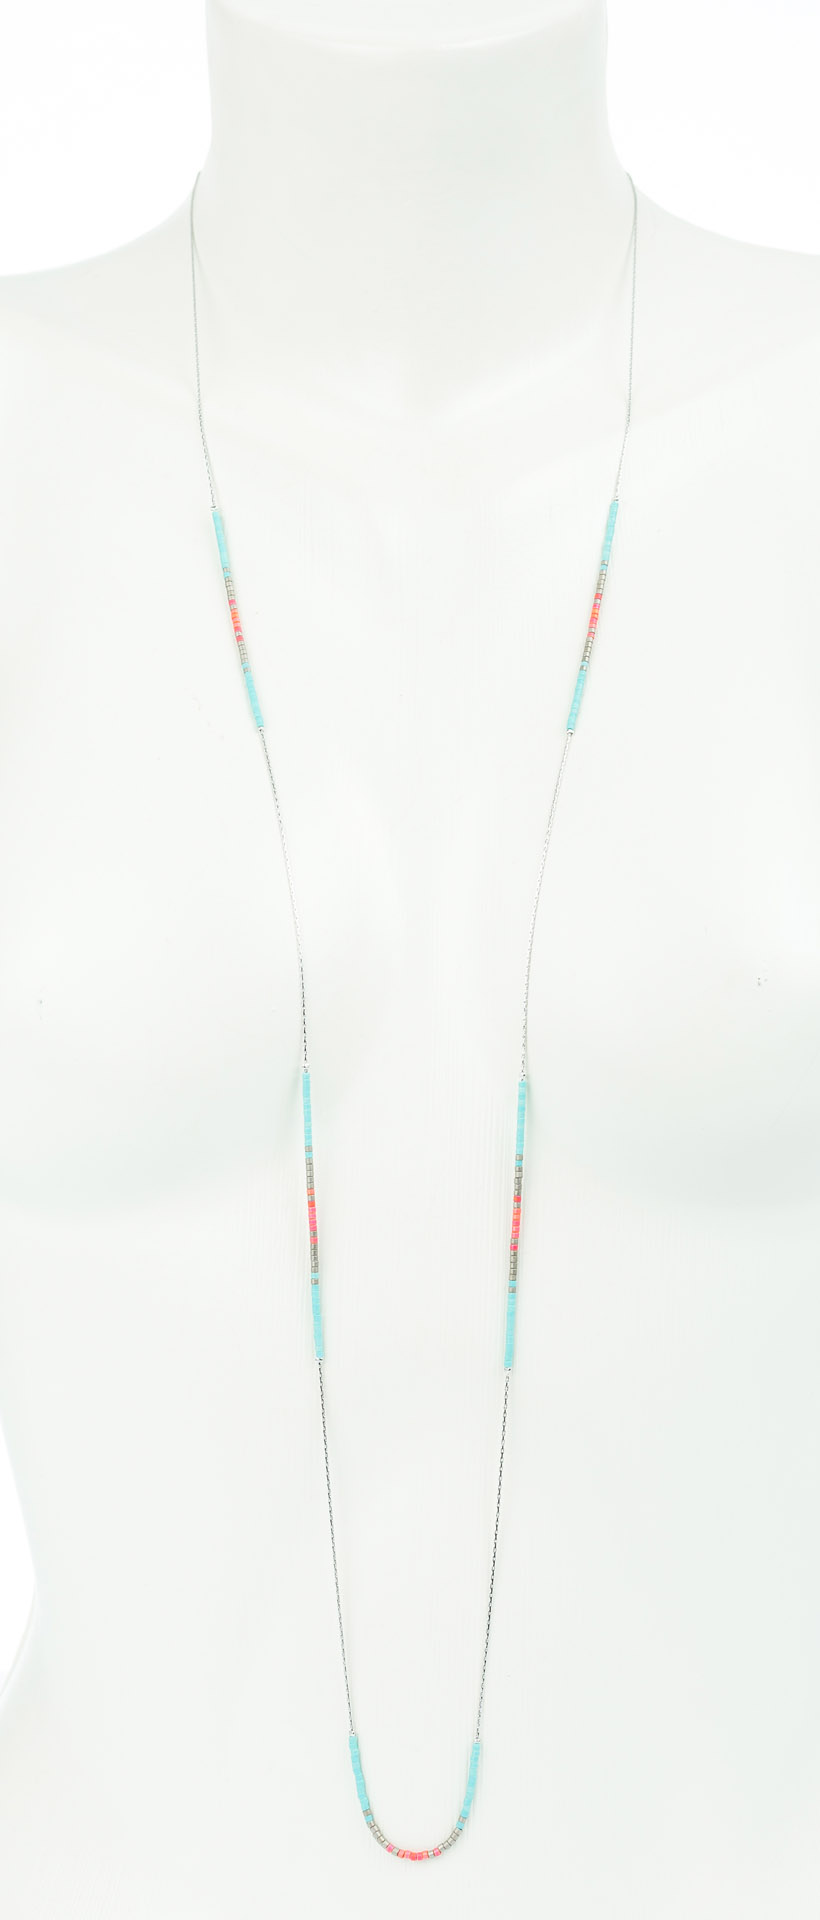 "Petite Beads" feine lange Metallkette mit japan. Rocaillesperlen, türkis-rot, silberfarben